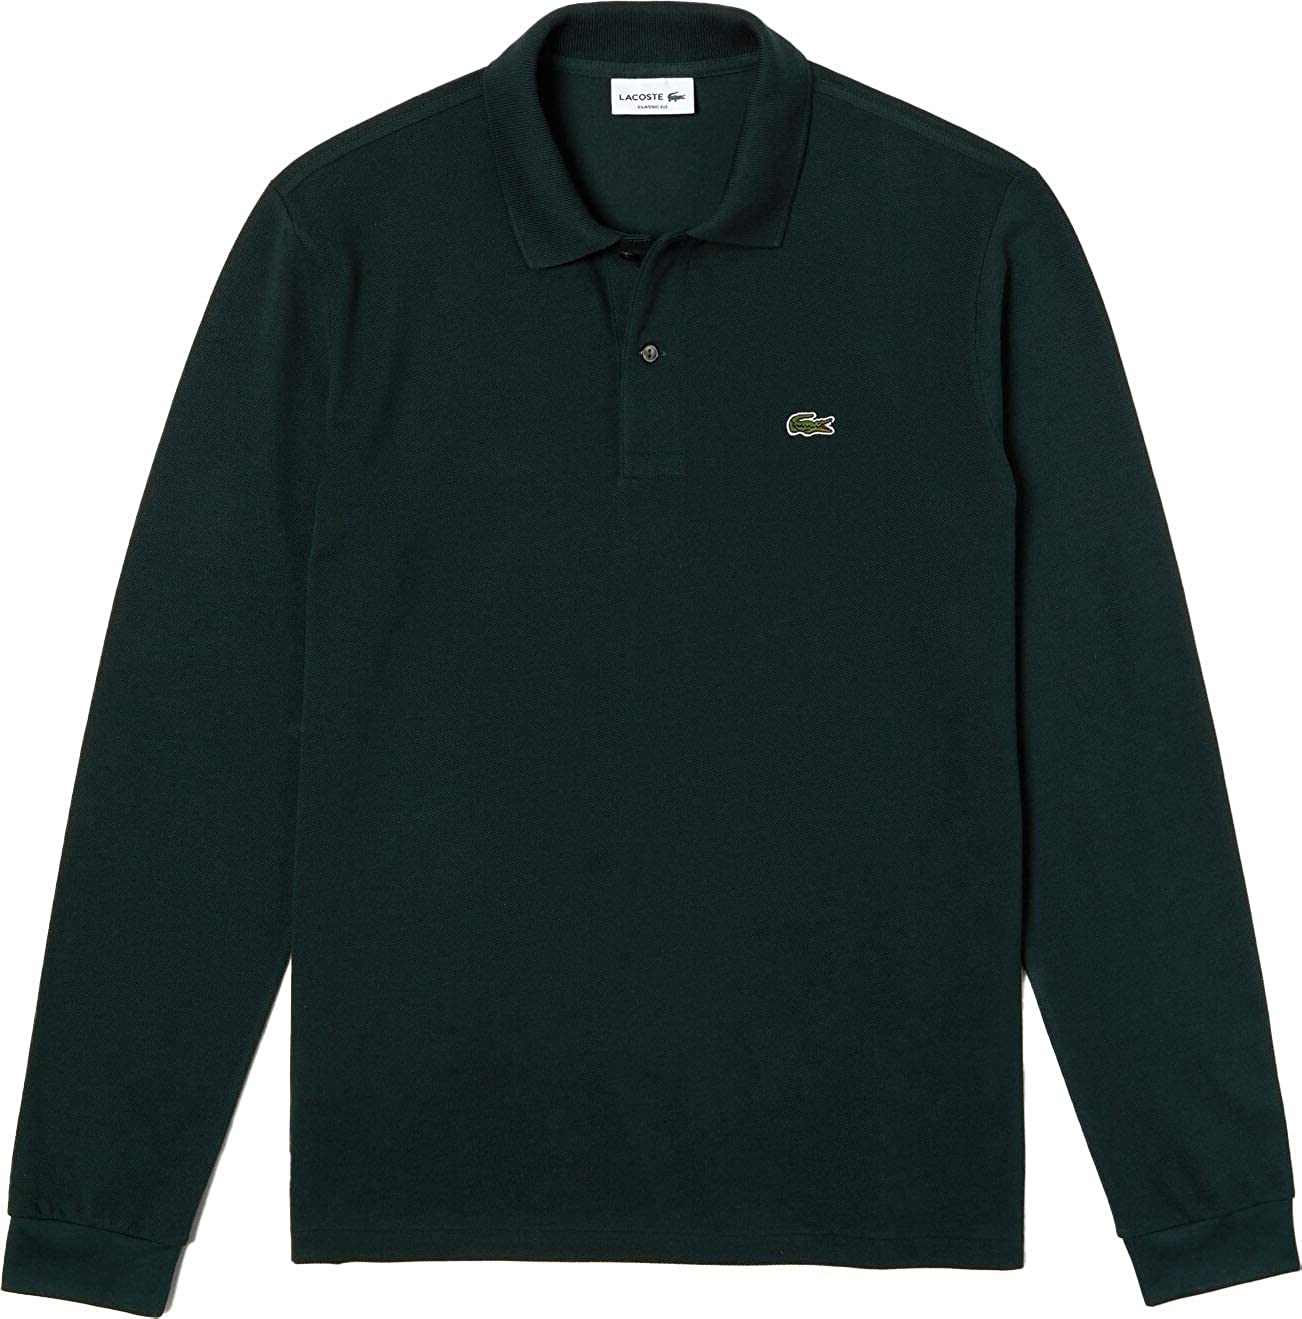 Lacoste Mens Classic Long Sleeve Pique Polo Shirt | eBay